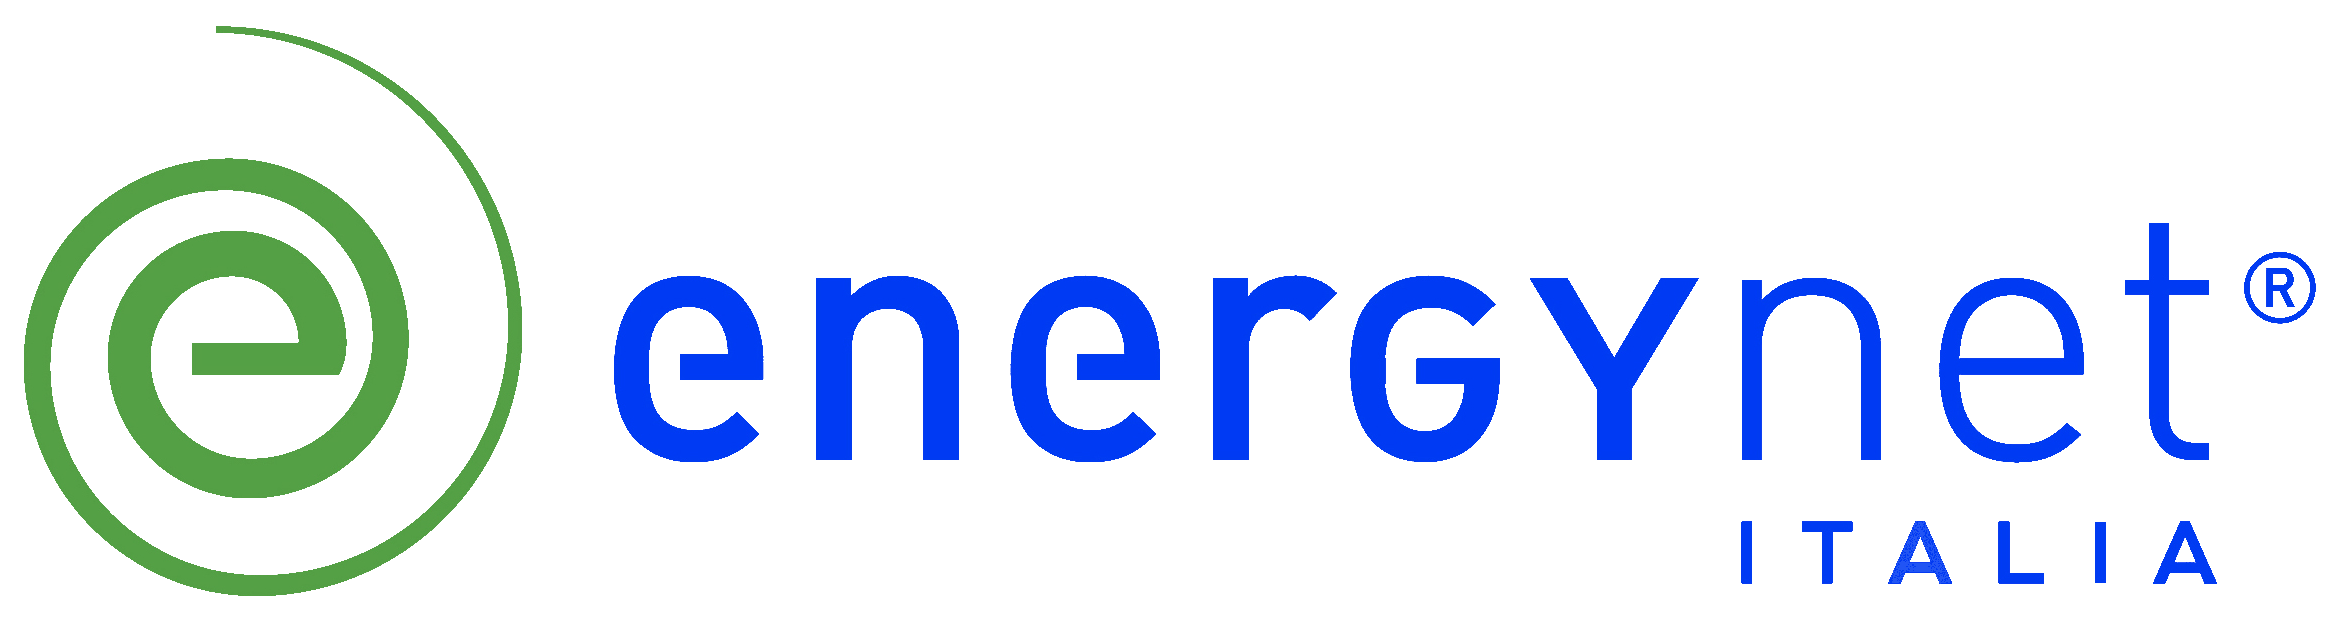 logo_energy_net_italia.png